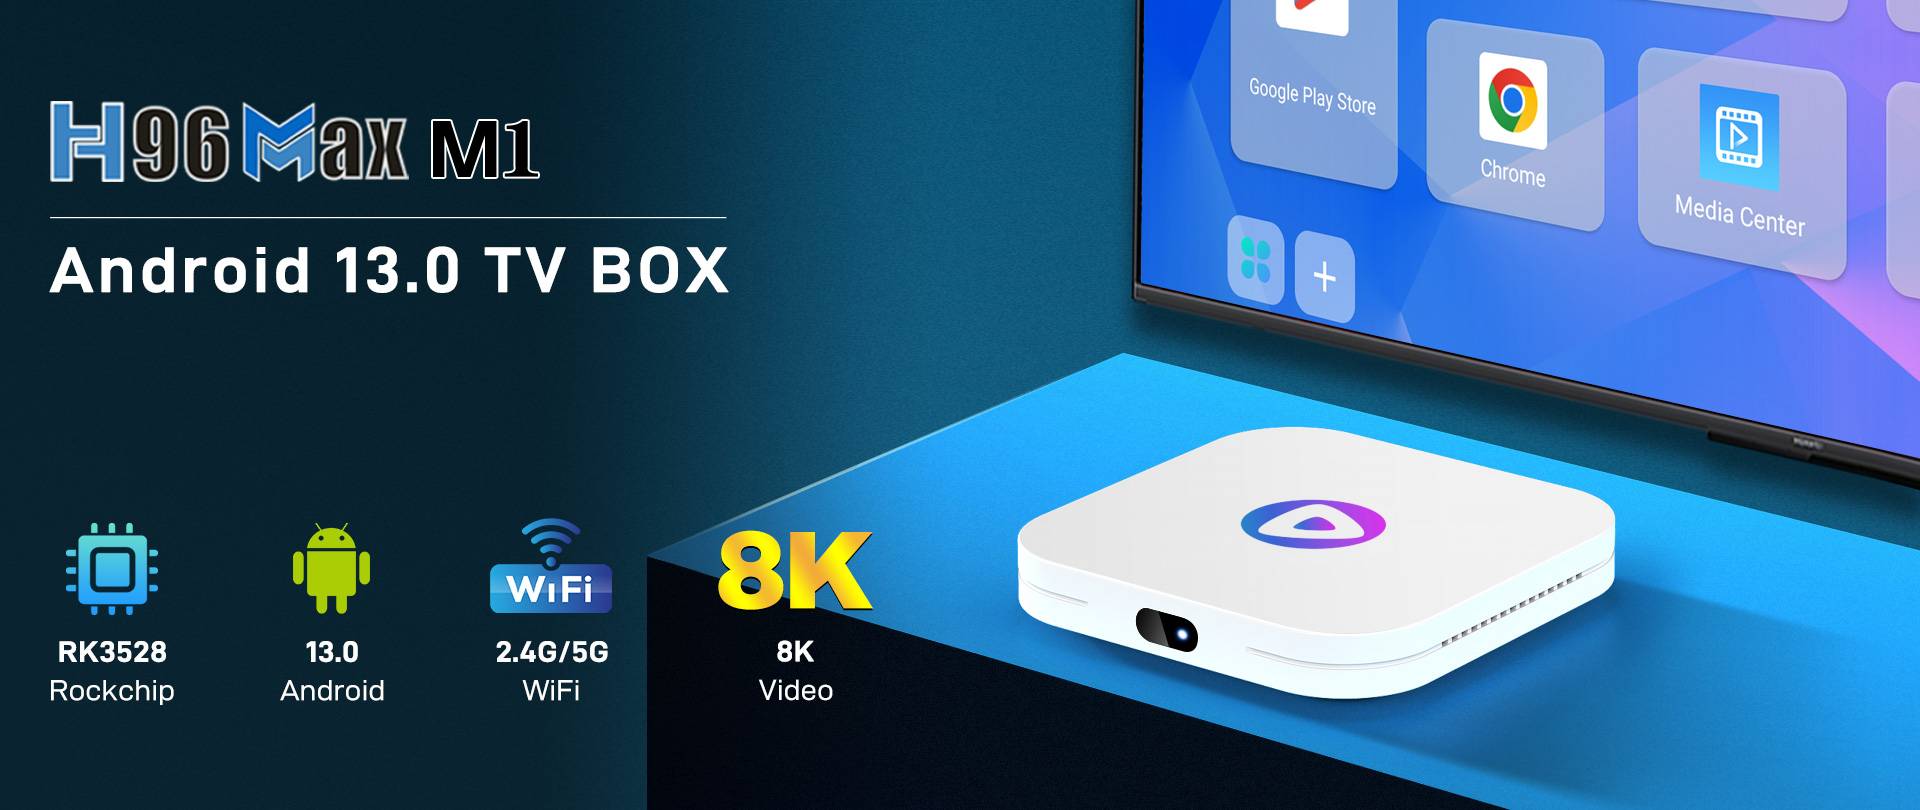 H96 MAX M1 Android 13.0 TV BOX